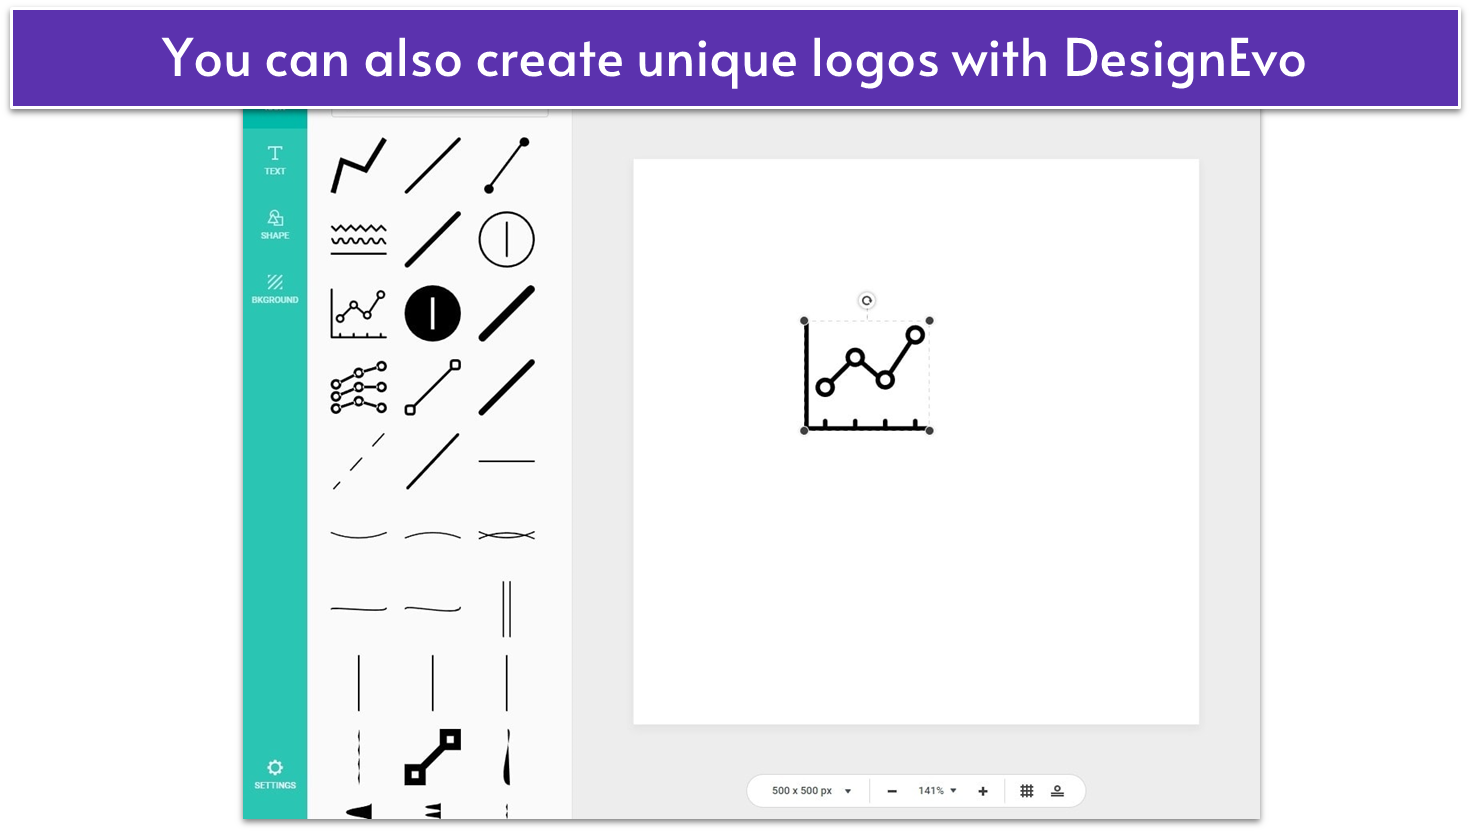 DesignCrowd’s logo editor tool